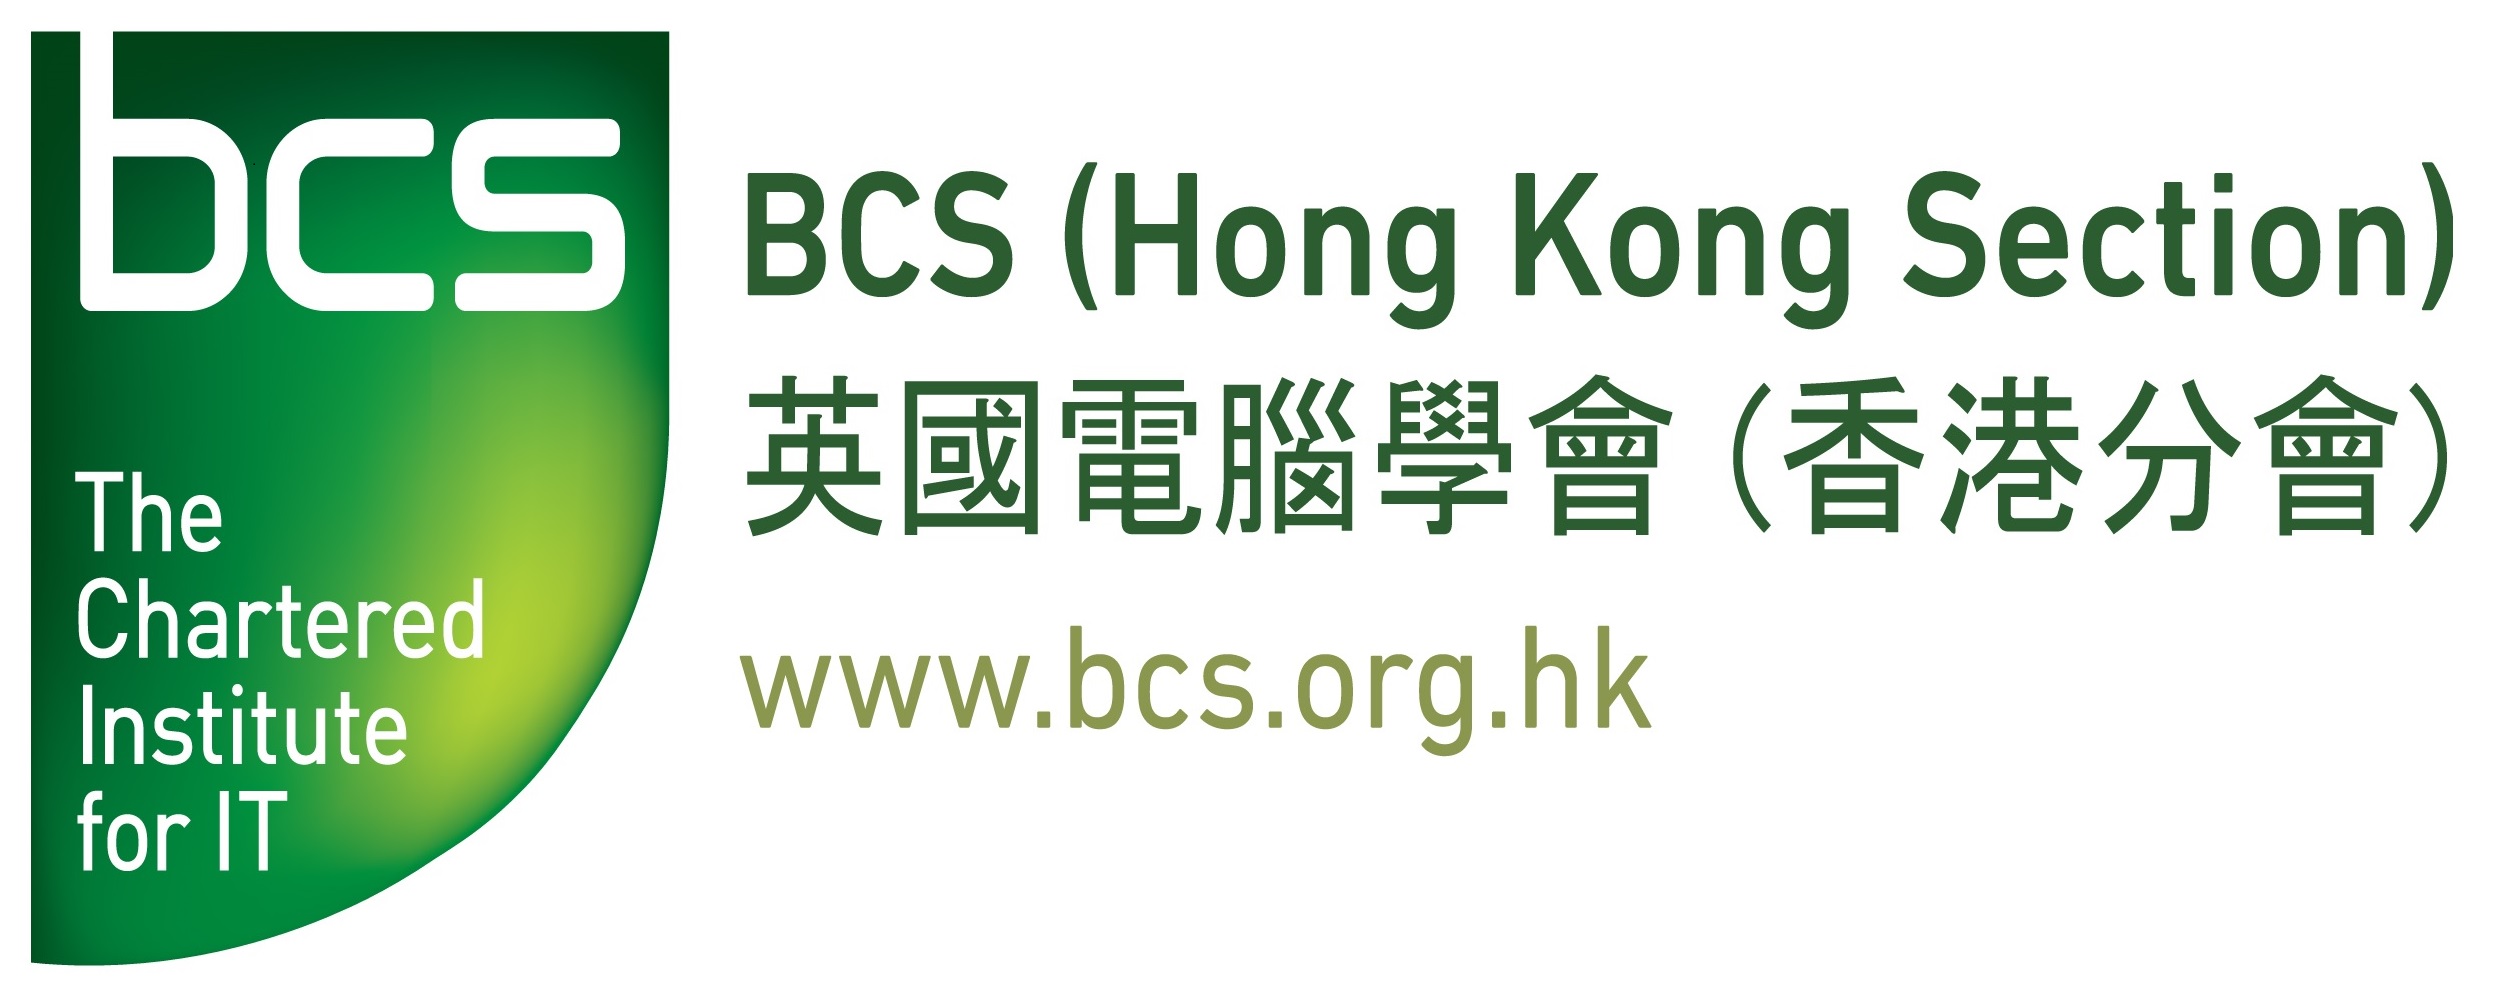 BCS-HKS Logo 2500x1000px